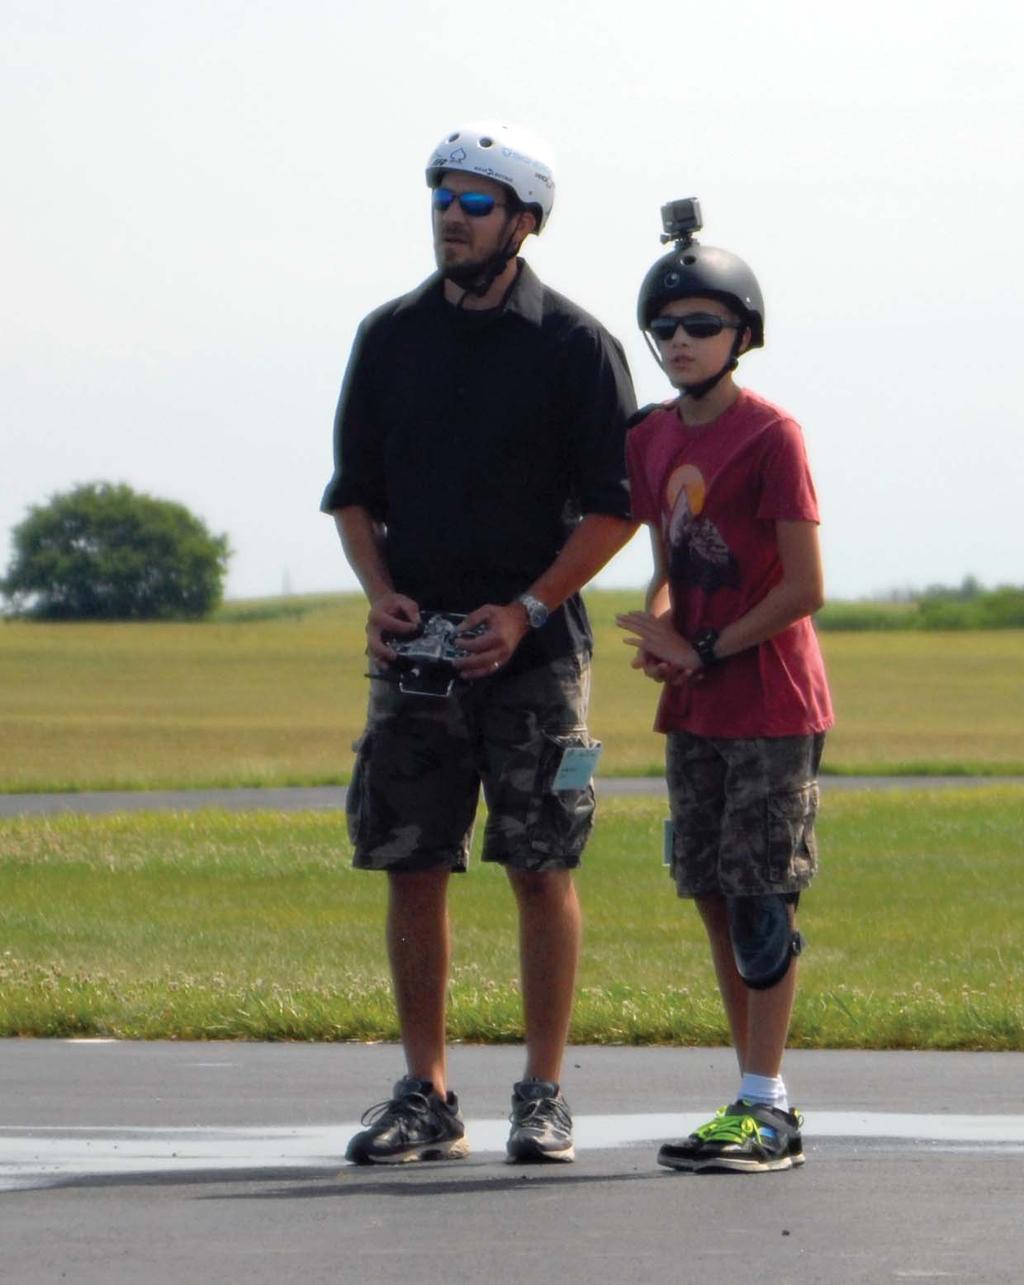 Kevin Yost and his son. Academy of Model Aeronautics International Aeromodeling Center, Muncie IN website: www.modelaircraft.